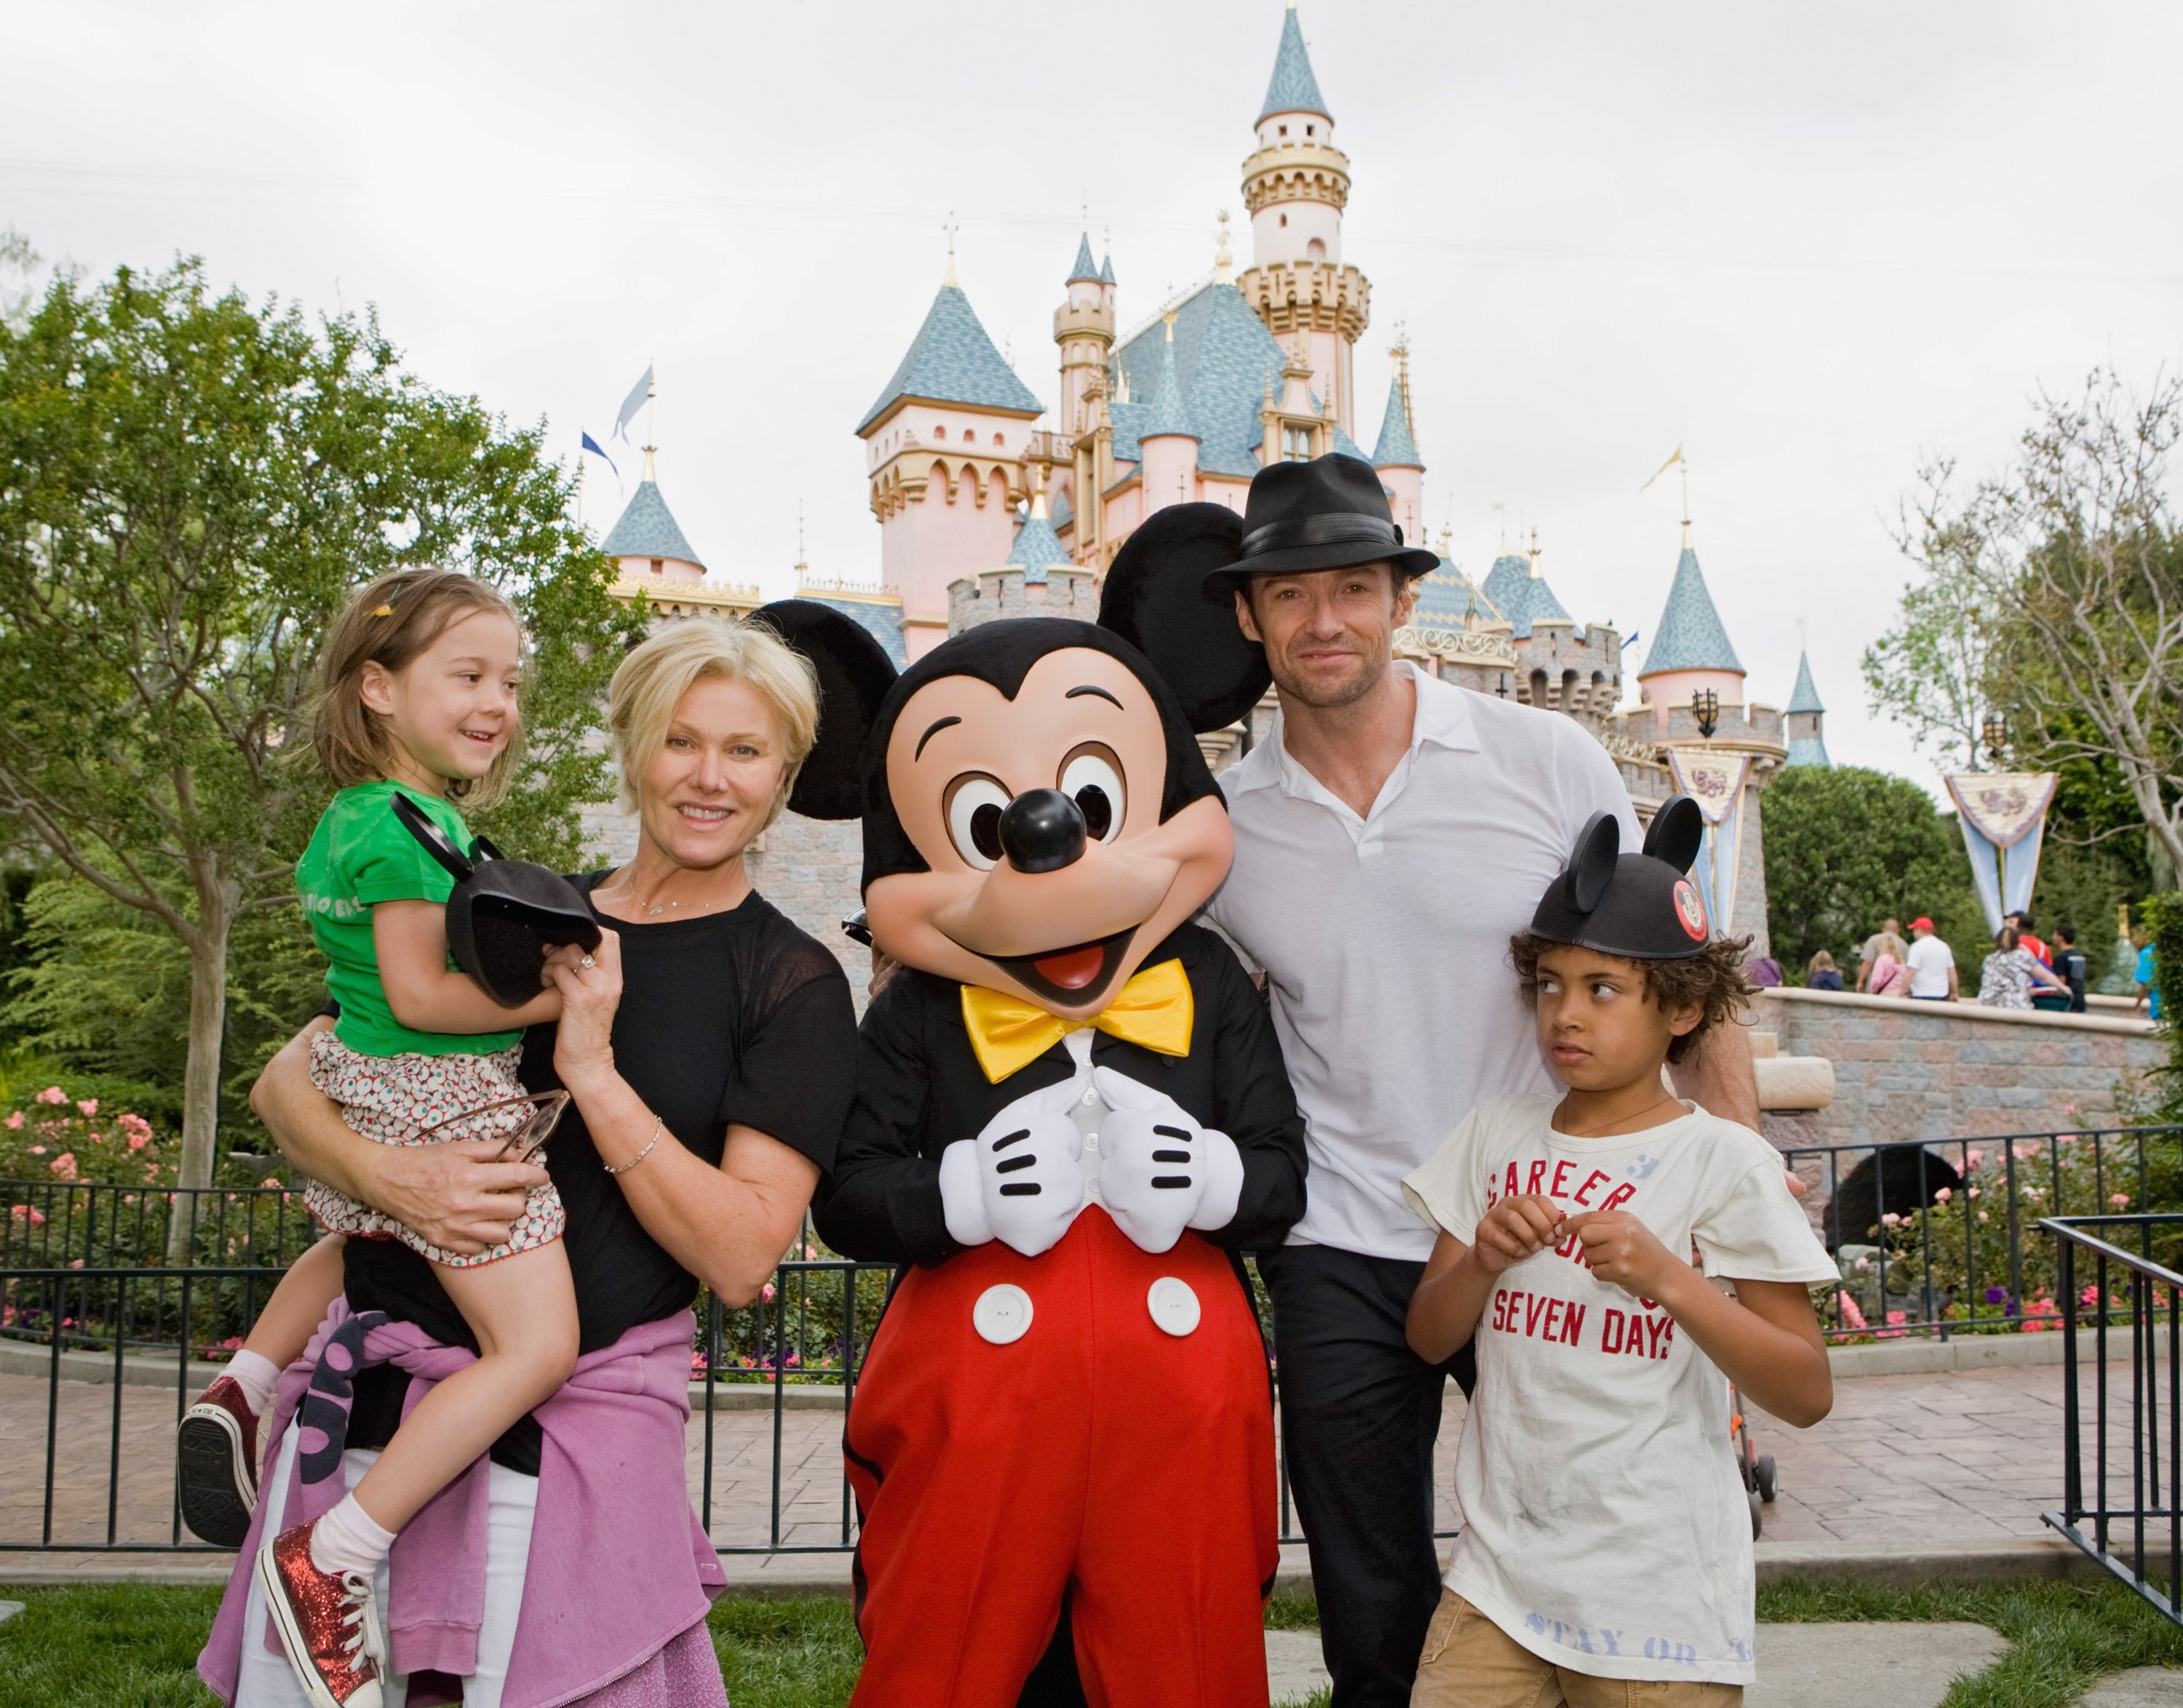 Hugh Jackman, his wife Deborra Lee Furness, and children Oscar Jackman and Ava Jackman pose at Disneyland. | Source: Getty Images